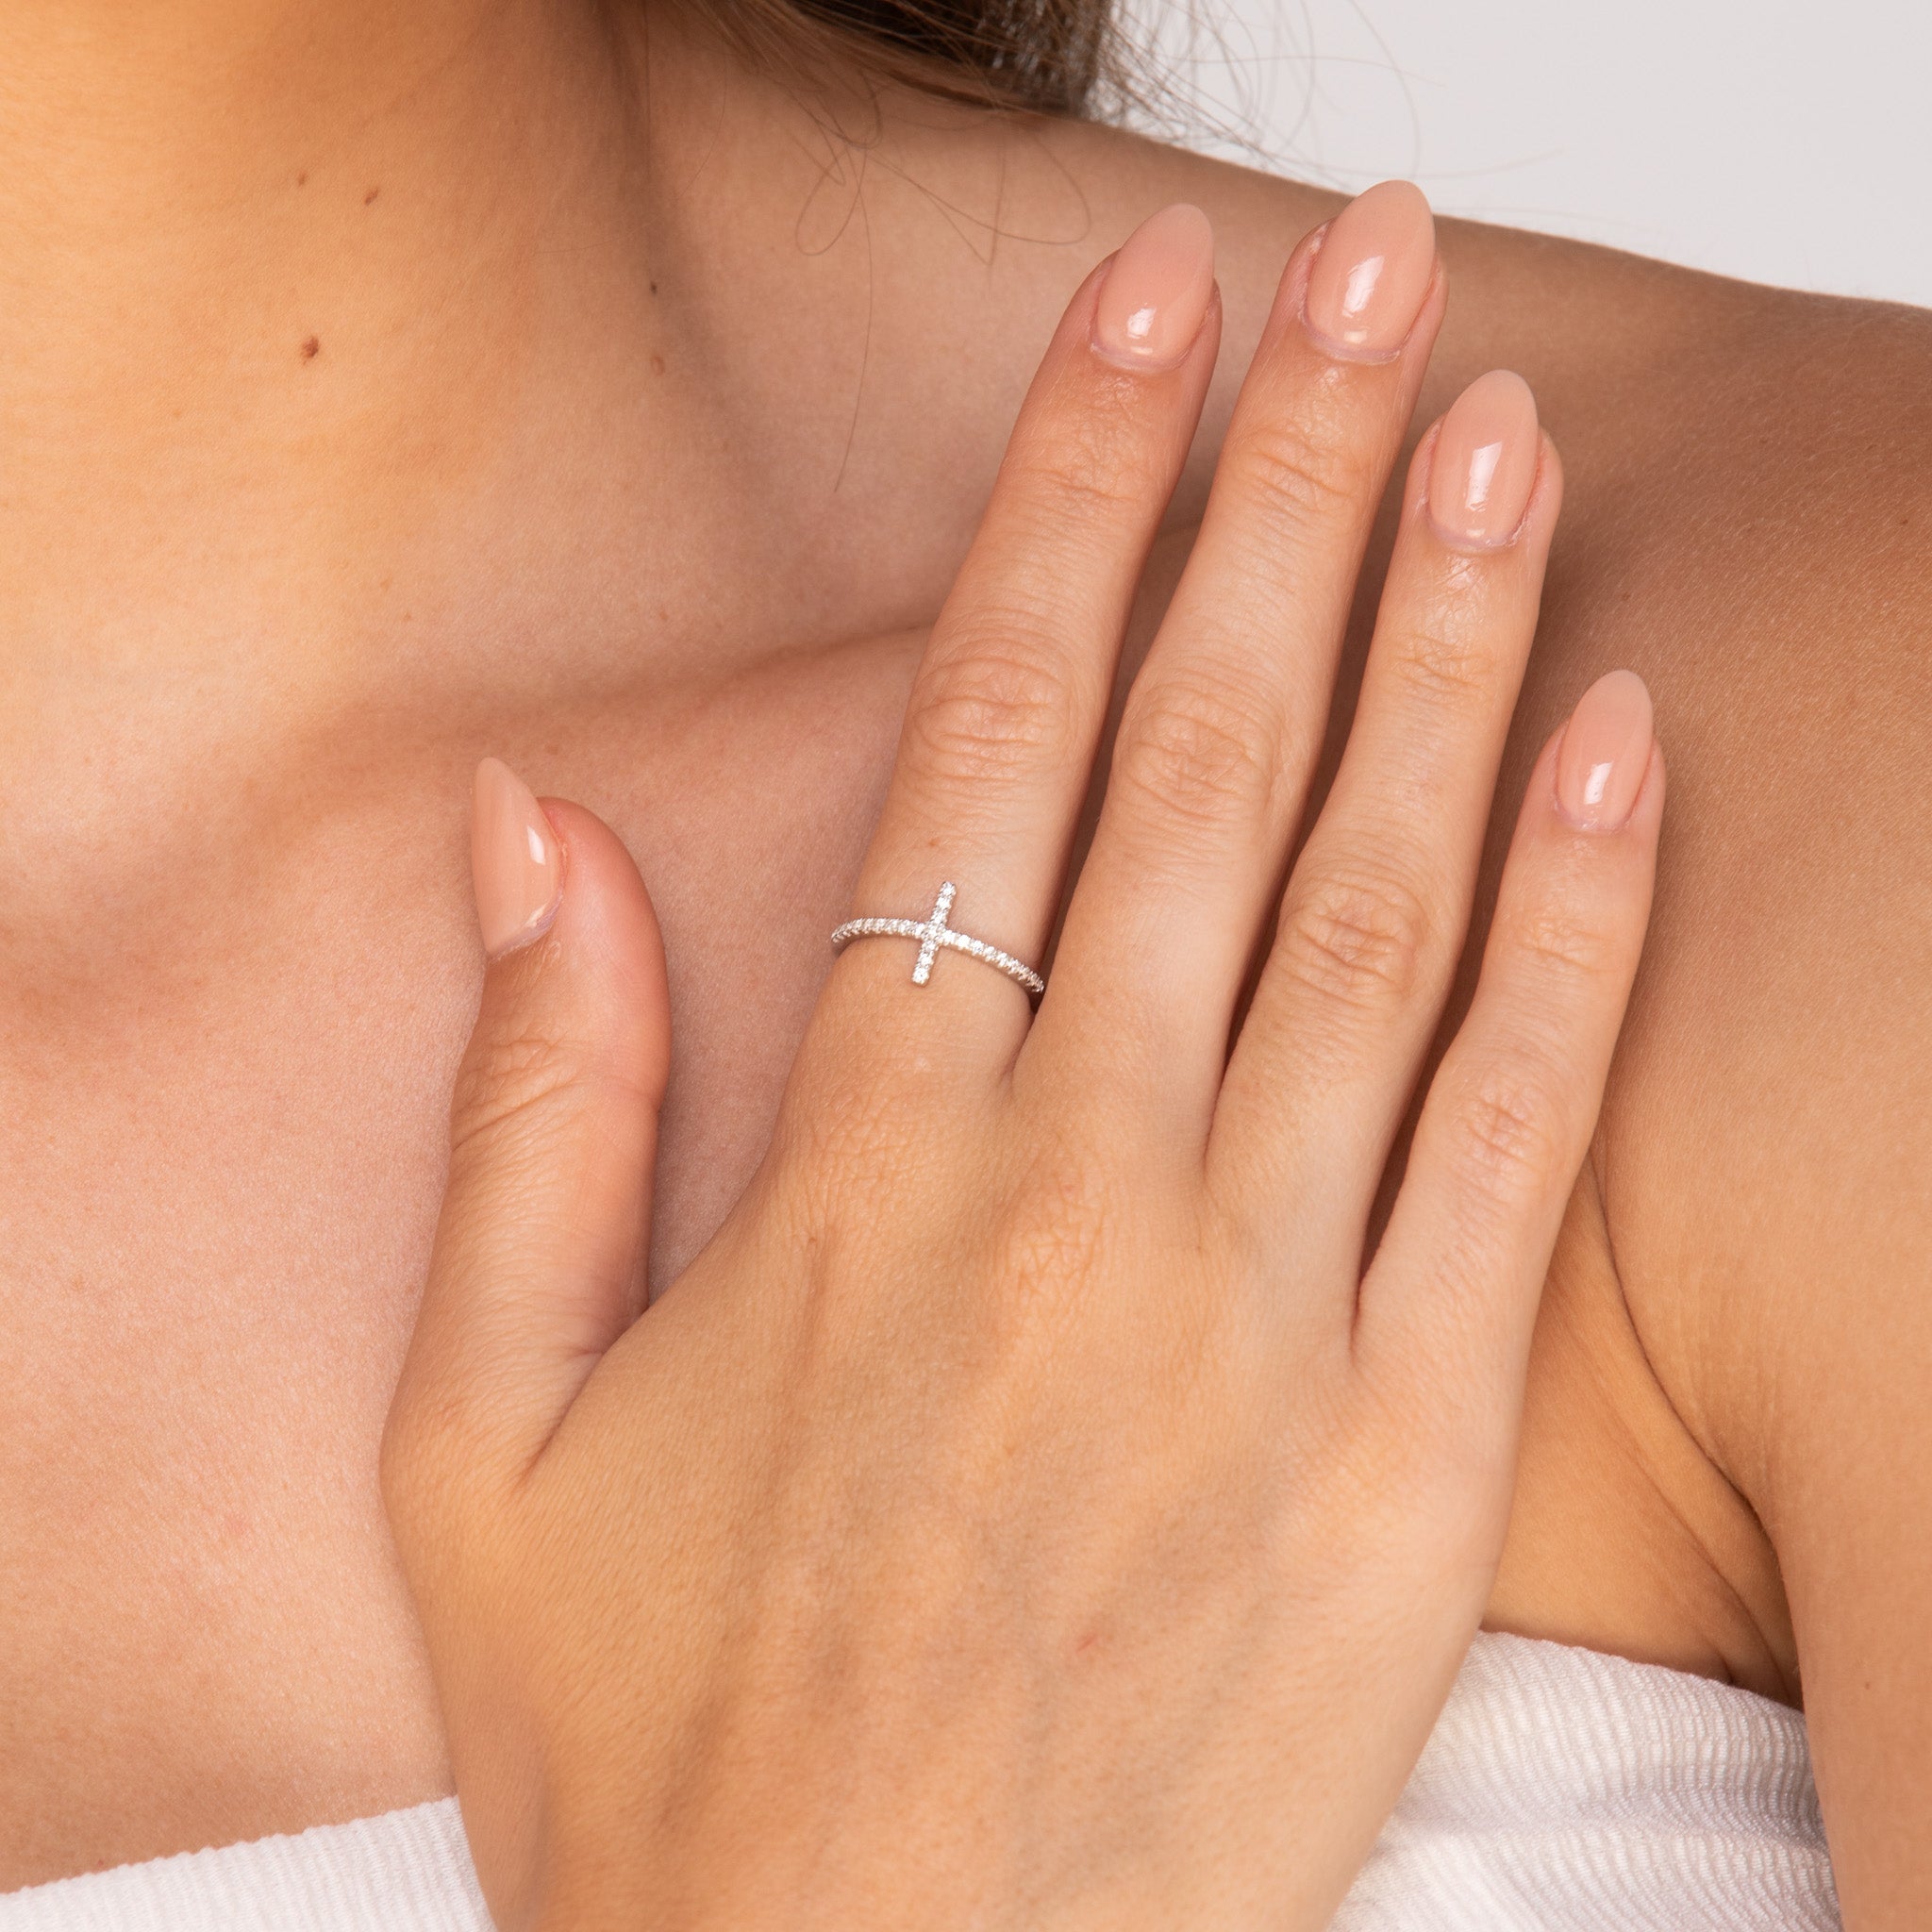 The Eleanor Cross Sapphire Engagement Wedding Ring